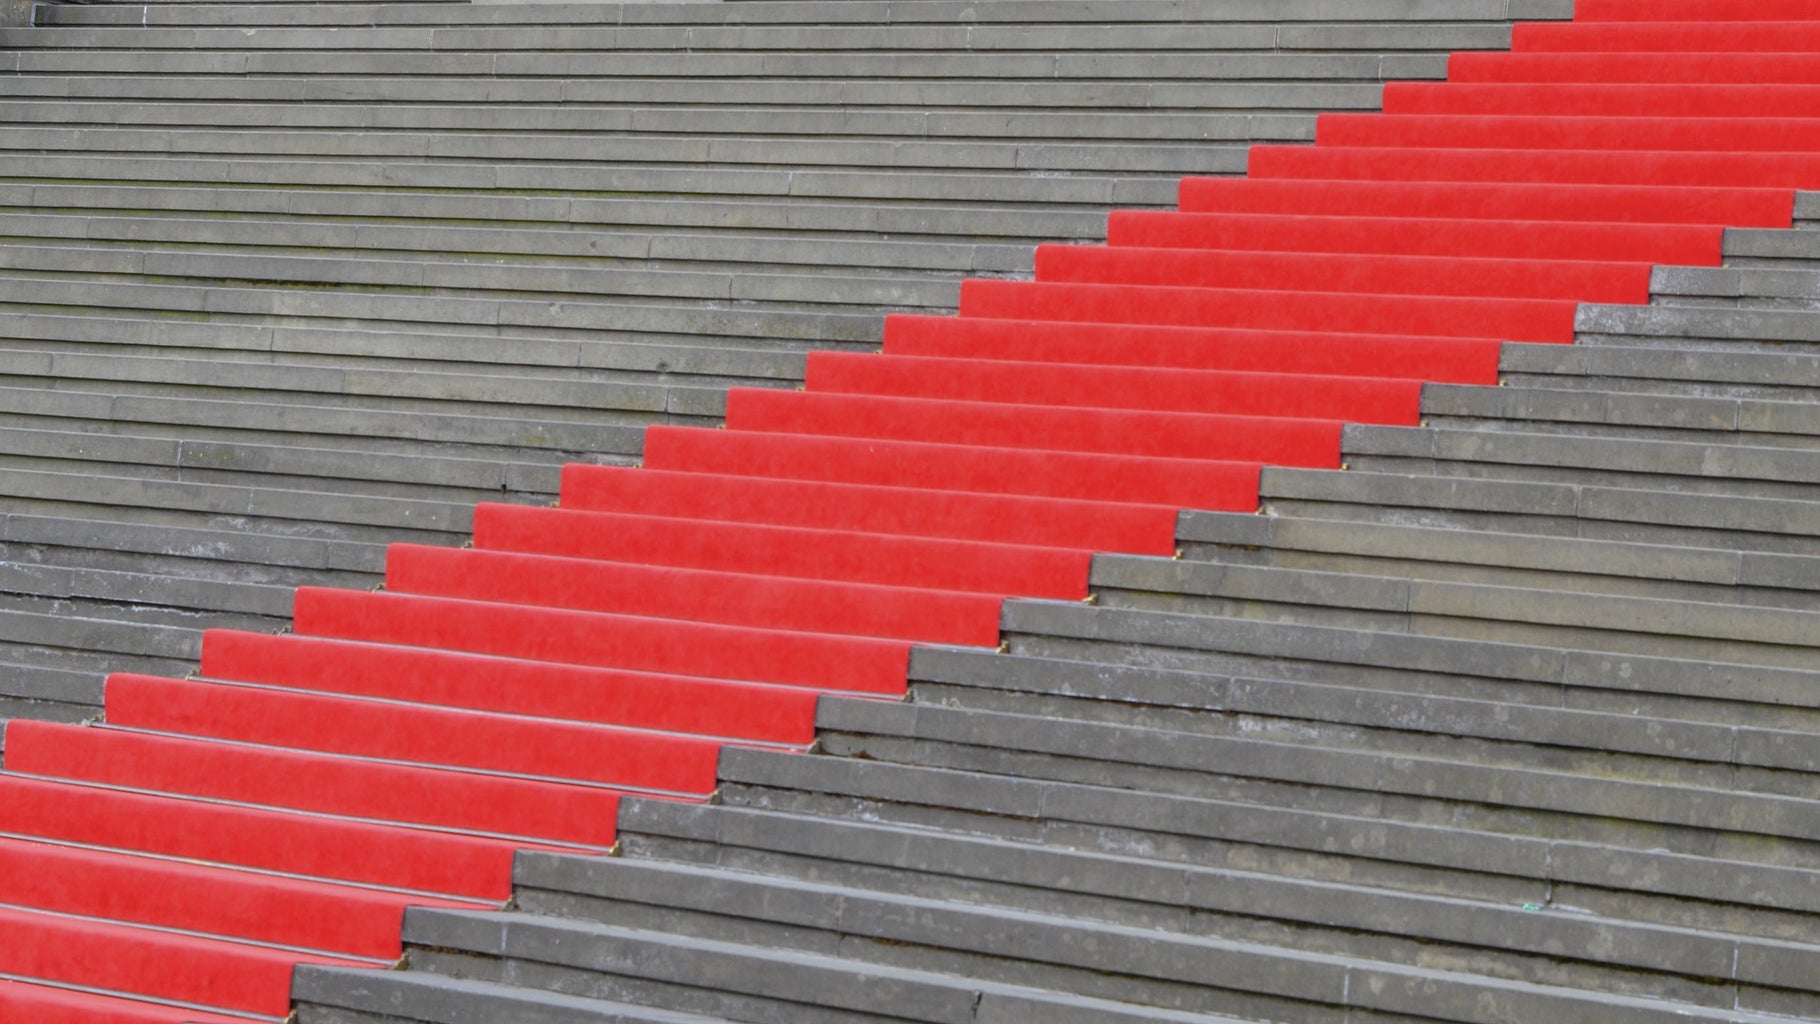 Red carpet on steps